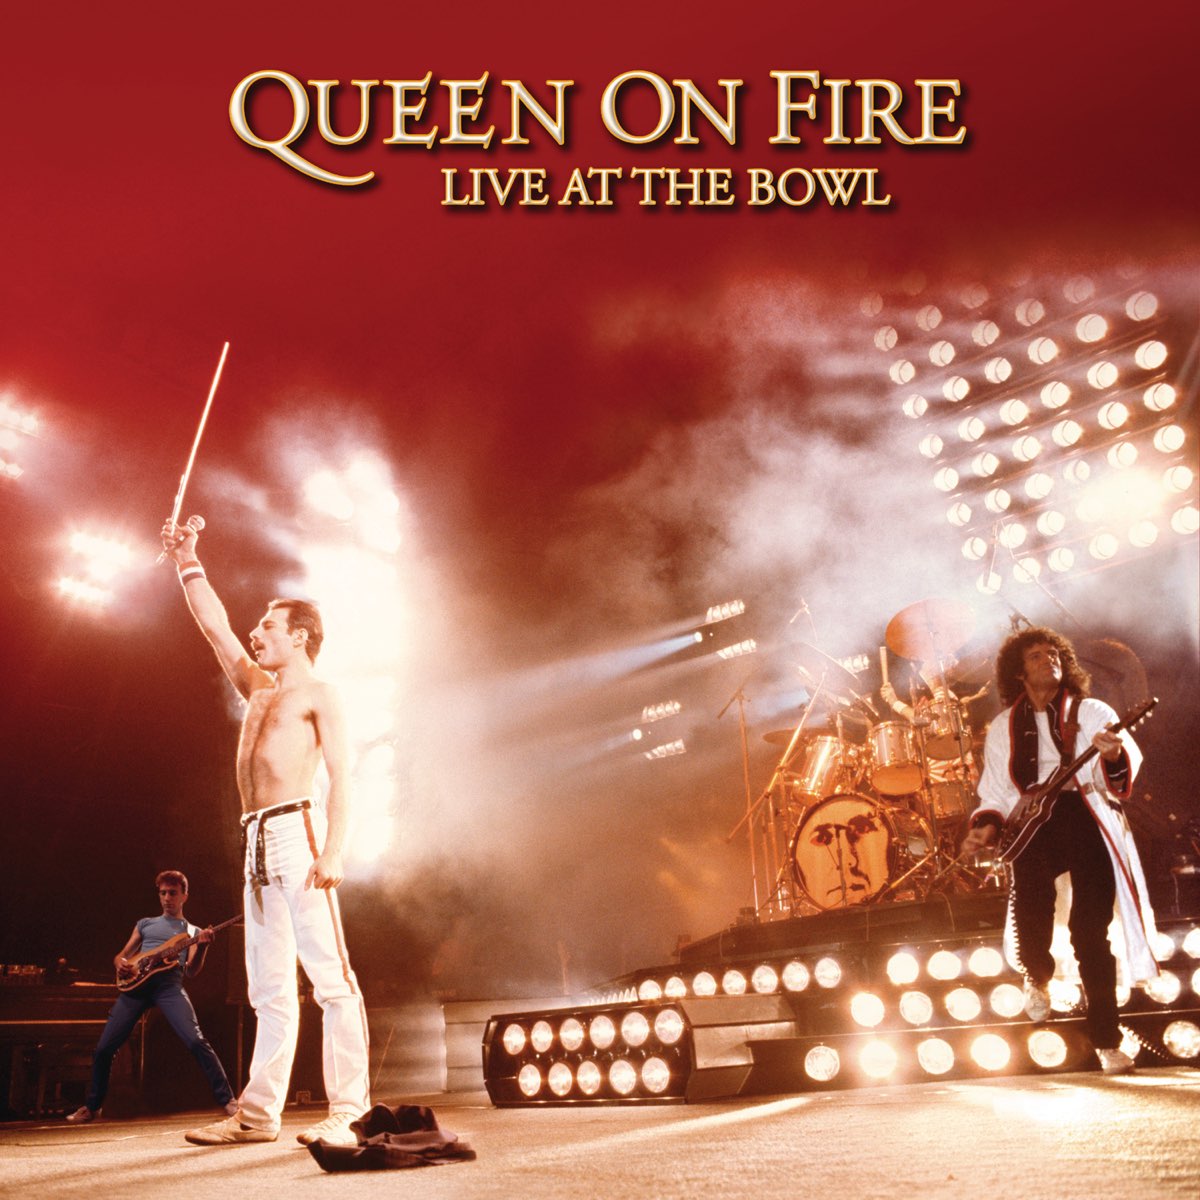 Queen Concert 1982. Queen Live at the Bowl. Queen on Fire - Live at the Bowl. Queen - Live at the Bowl DVD. The queen lives in a big